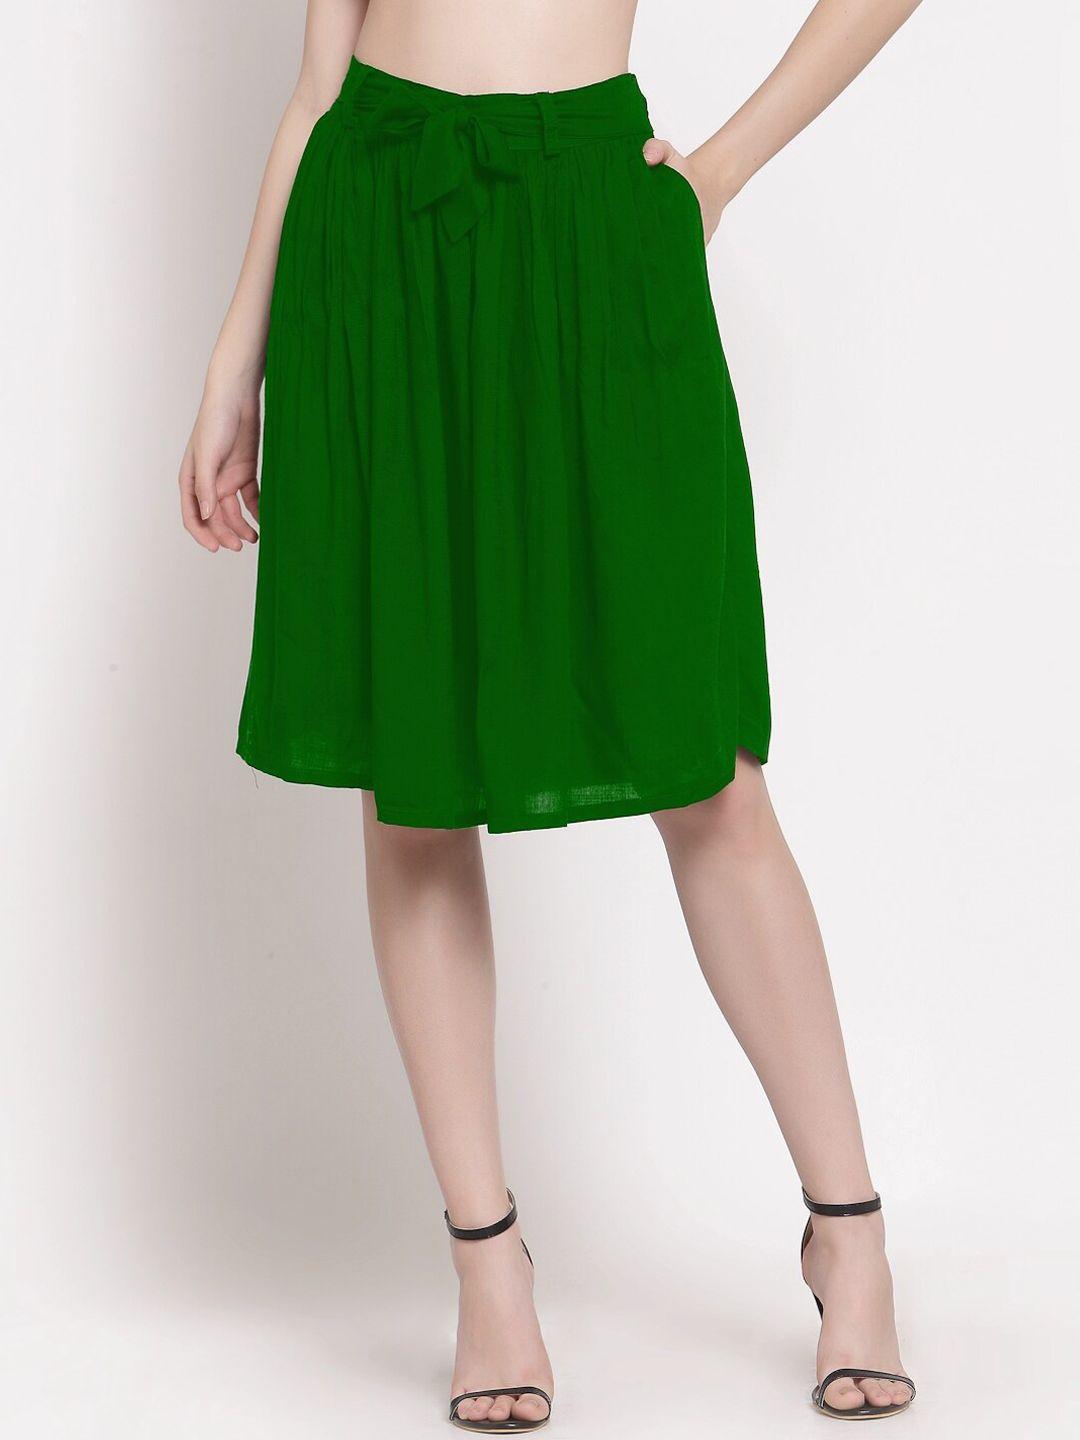 patrorna women plus size green skirt